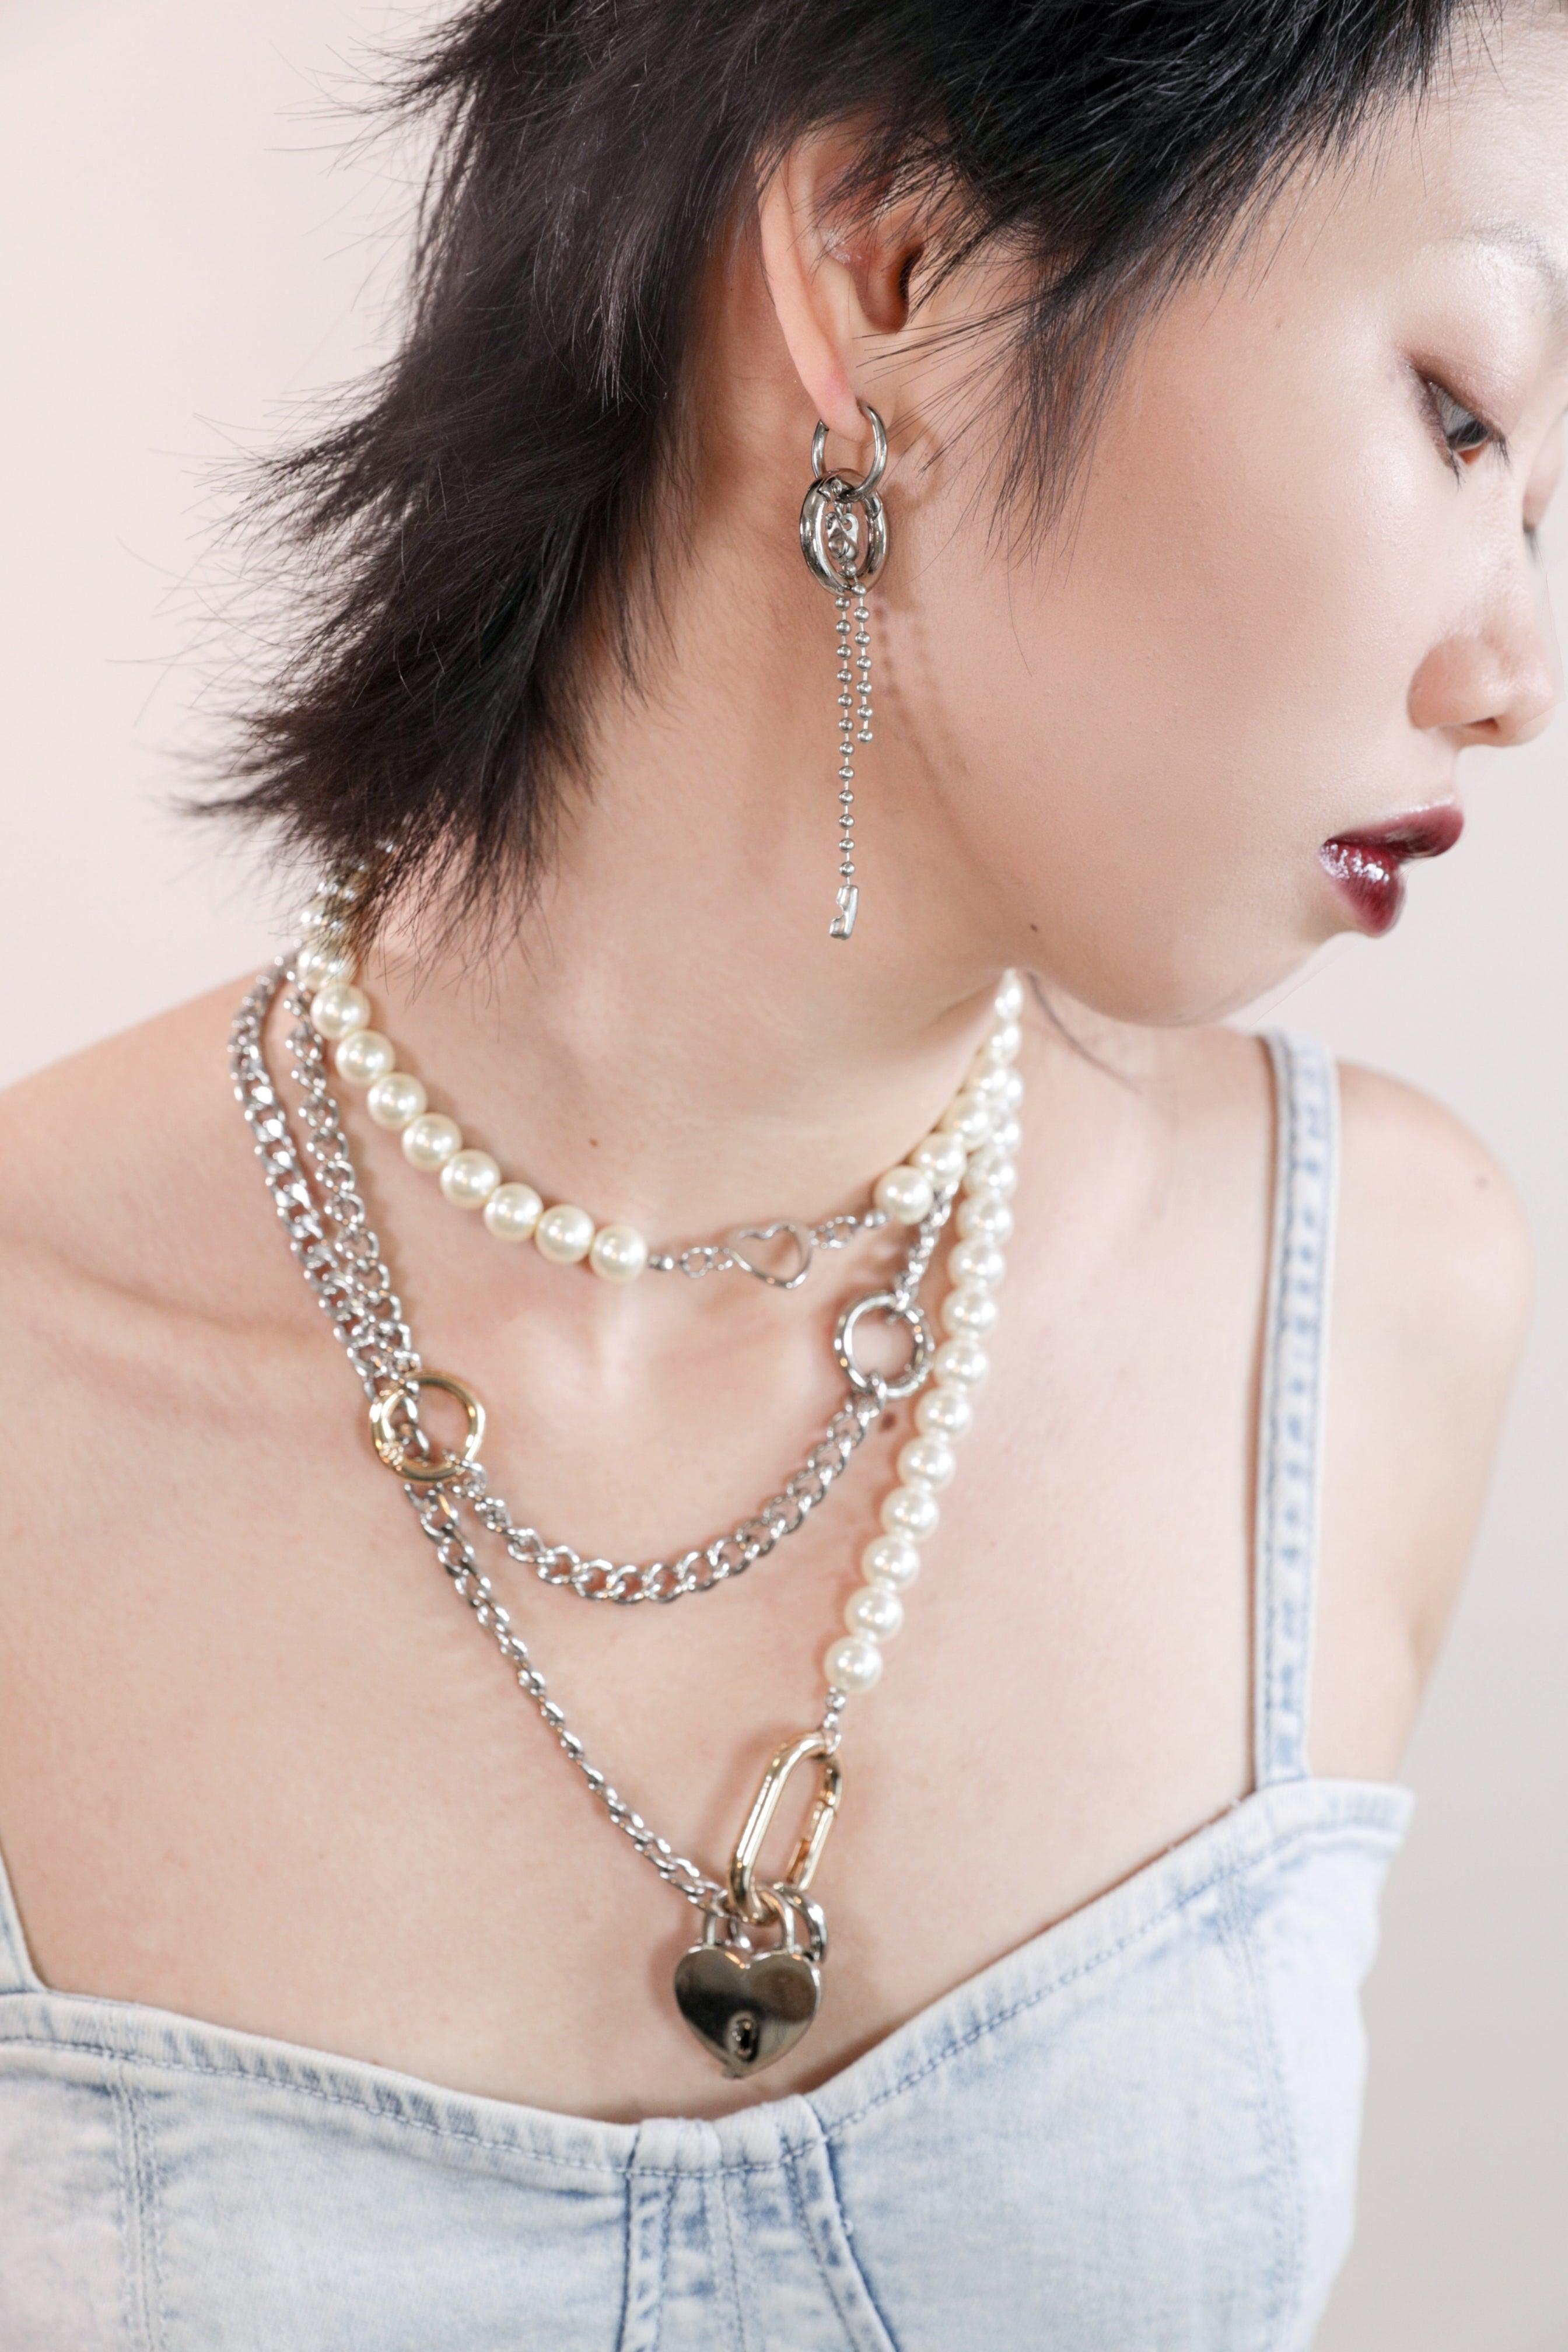 Heart-shaped Pearl Necklace | Fancy jewelry, Girly jewelry, Jewelry  accessories ideas